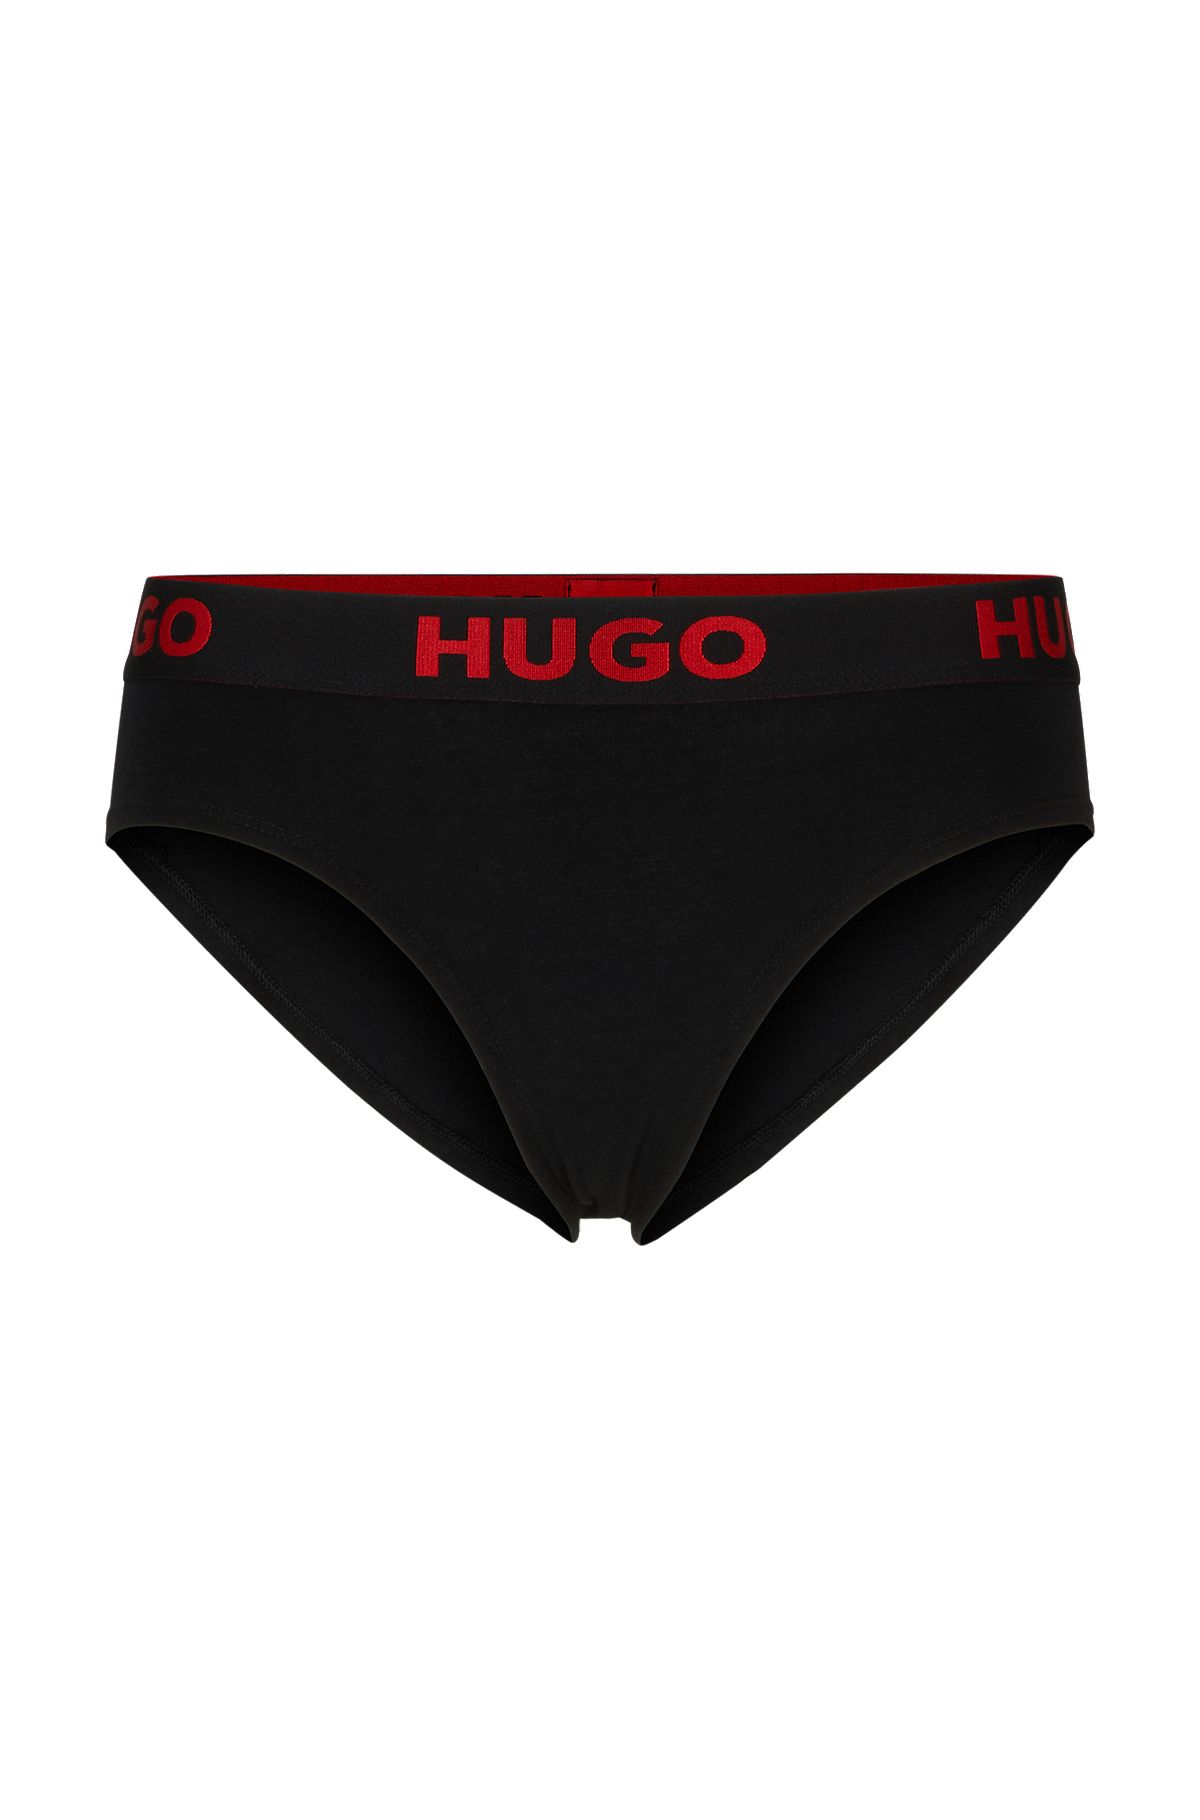 HUGO - Stretch-cotton briefs red logo label with